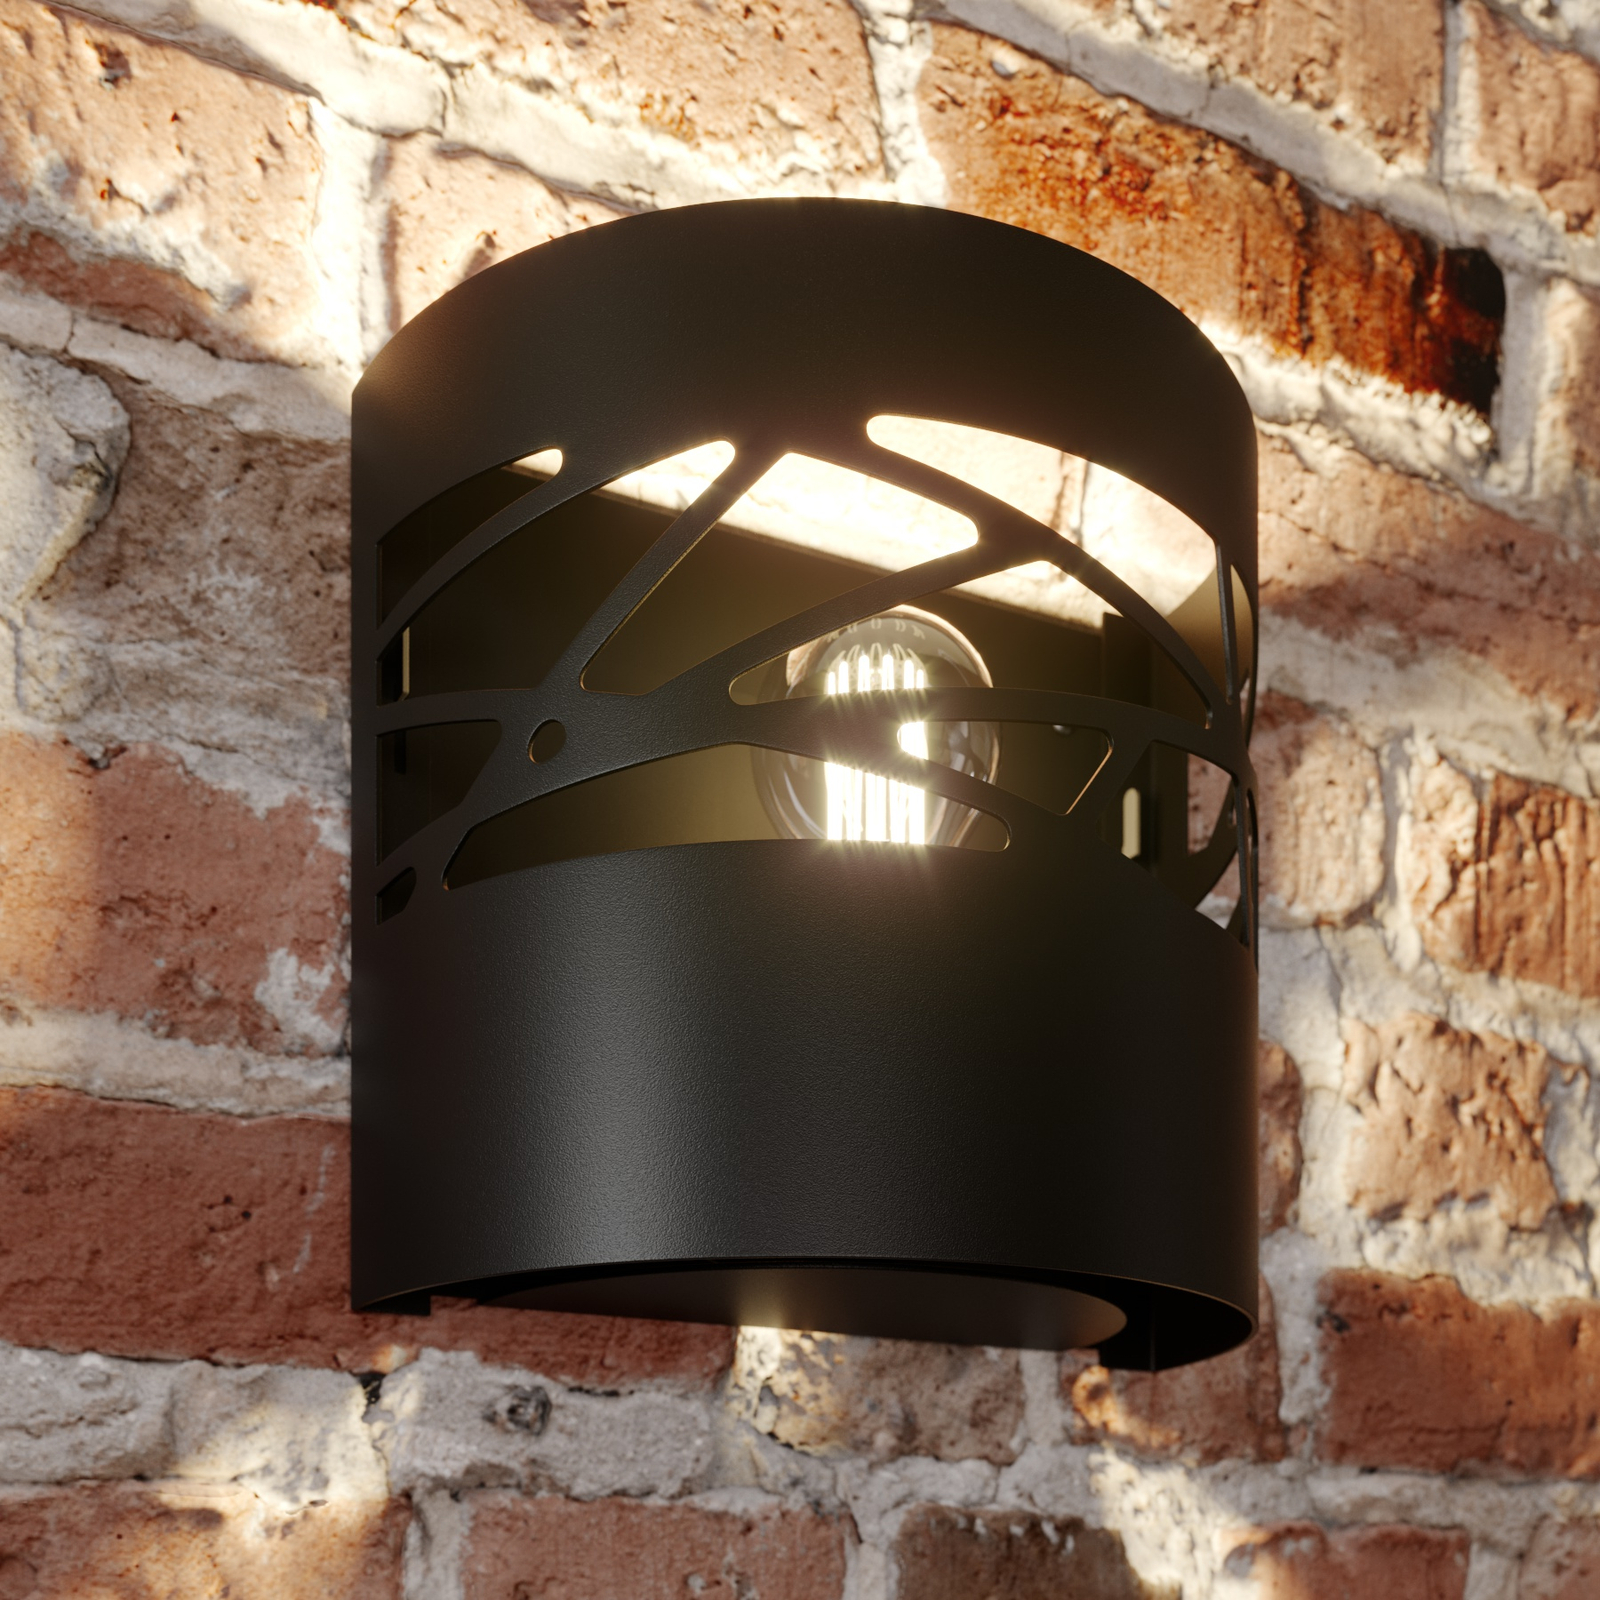 Modul Frez wall light with black sample shade